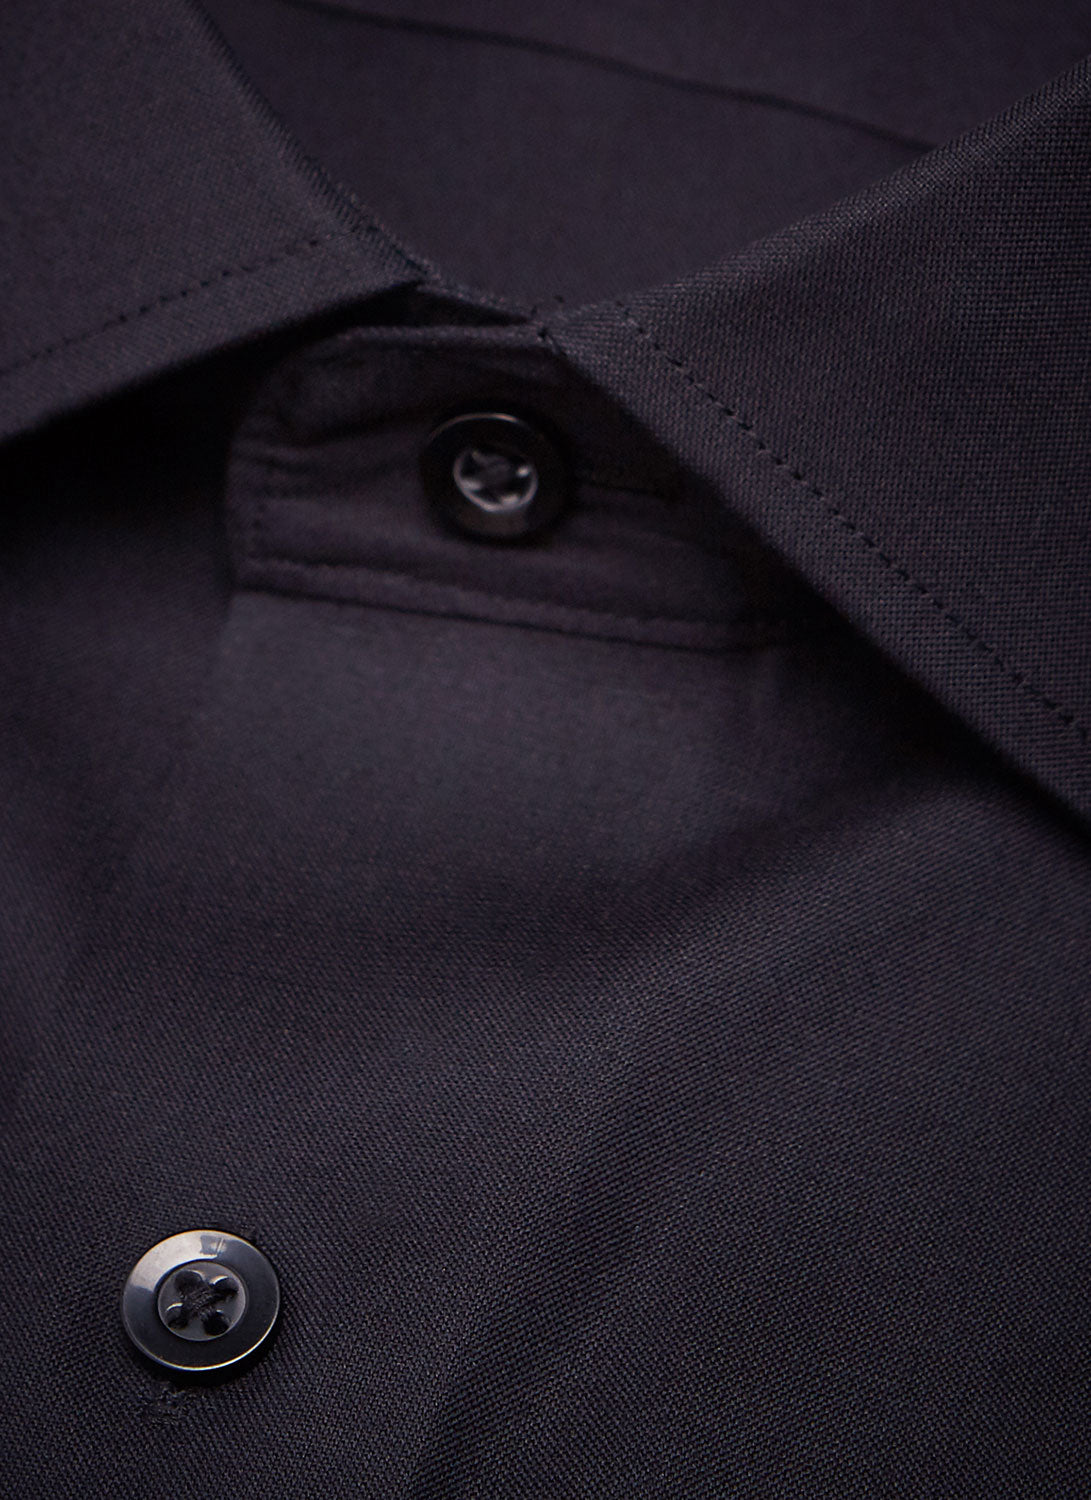 The Perfect White Shirt® in Black-Maxwell – Lorenzo Uomo